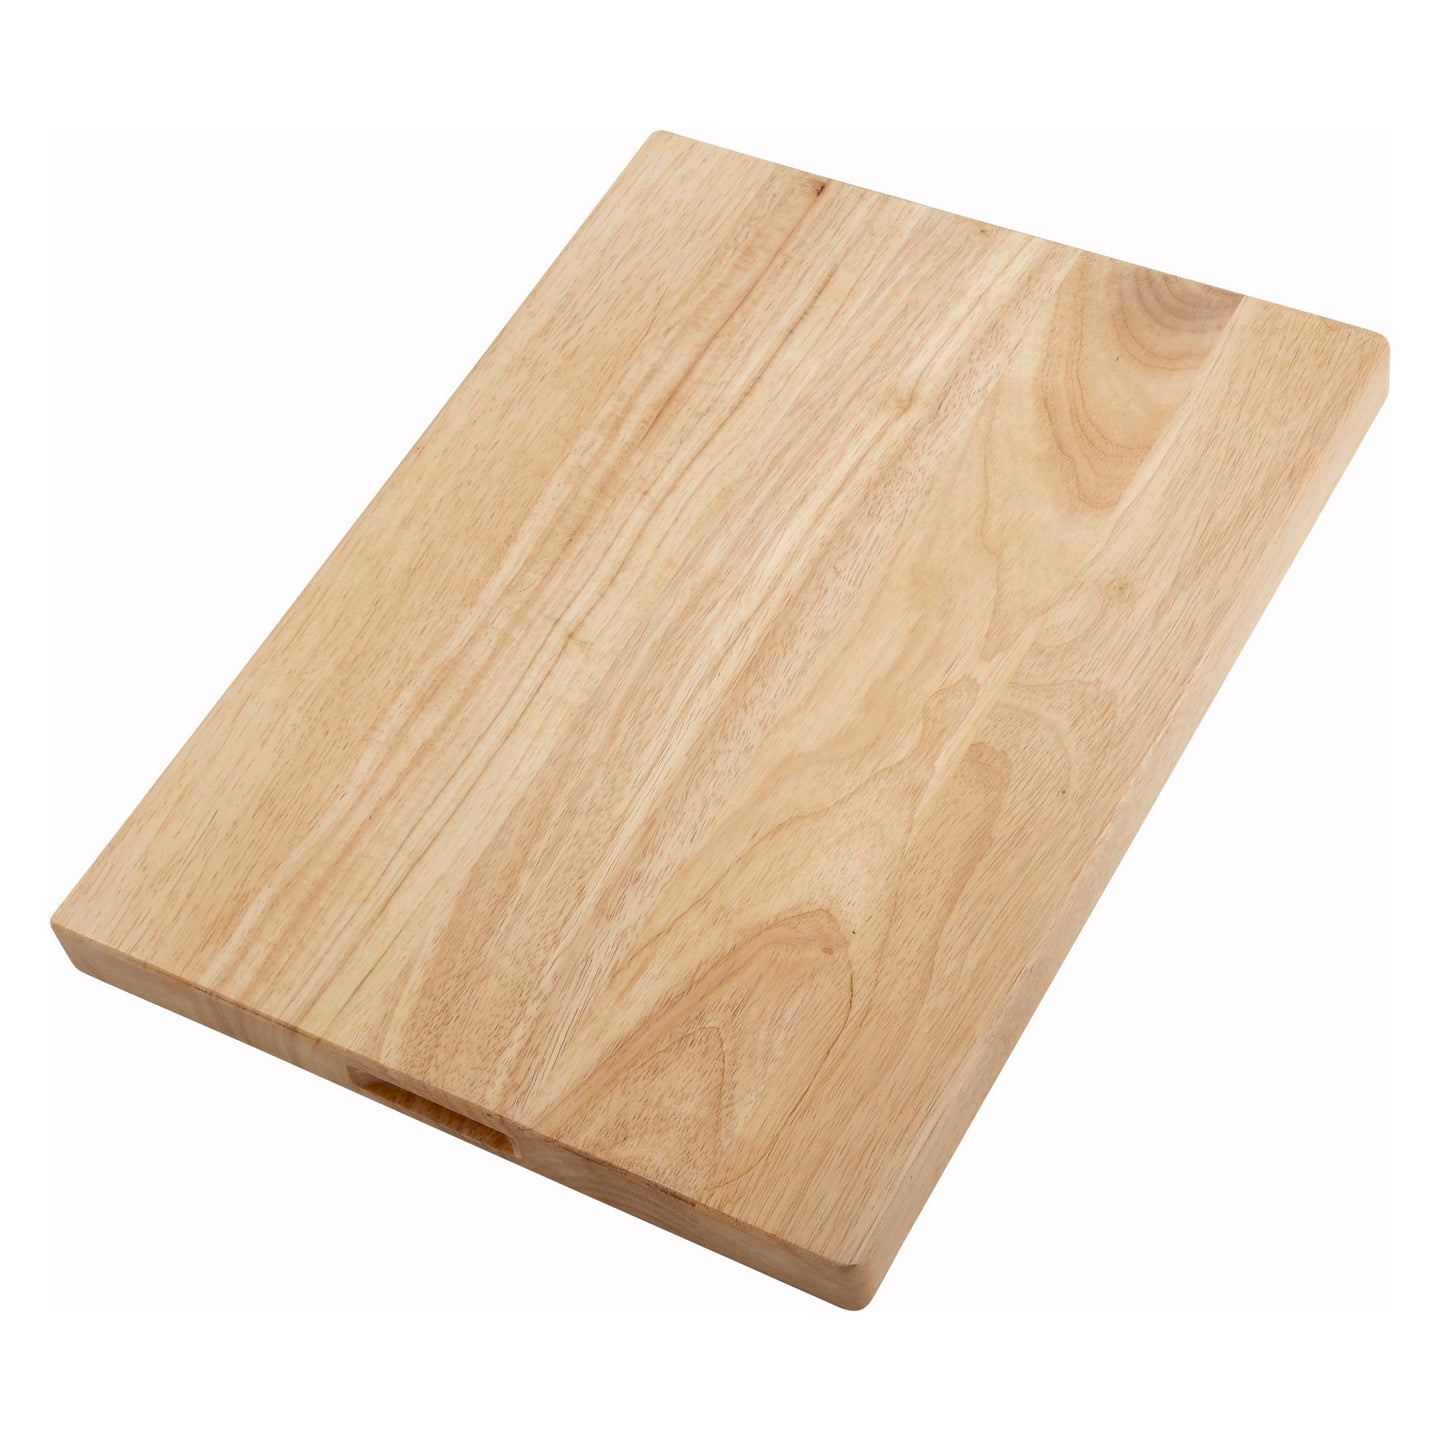 WCB-1830 - Wooden Cutting Boards - 18 x 30